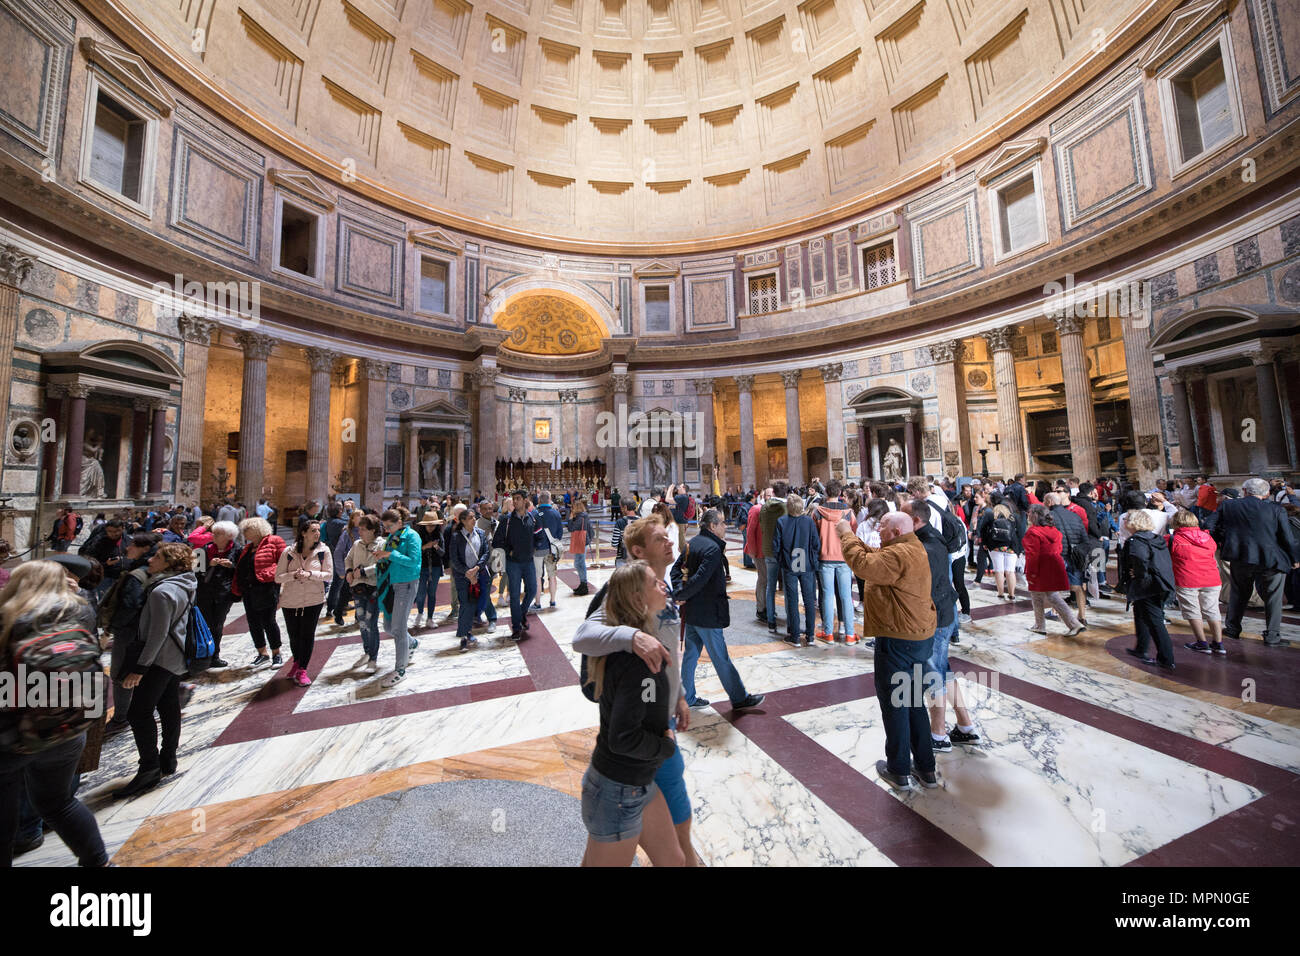 Pantheon interior, tourists visiting the monument, scene, Rome Italy, scene Stock Photo